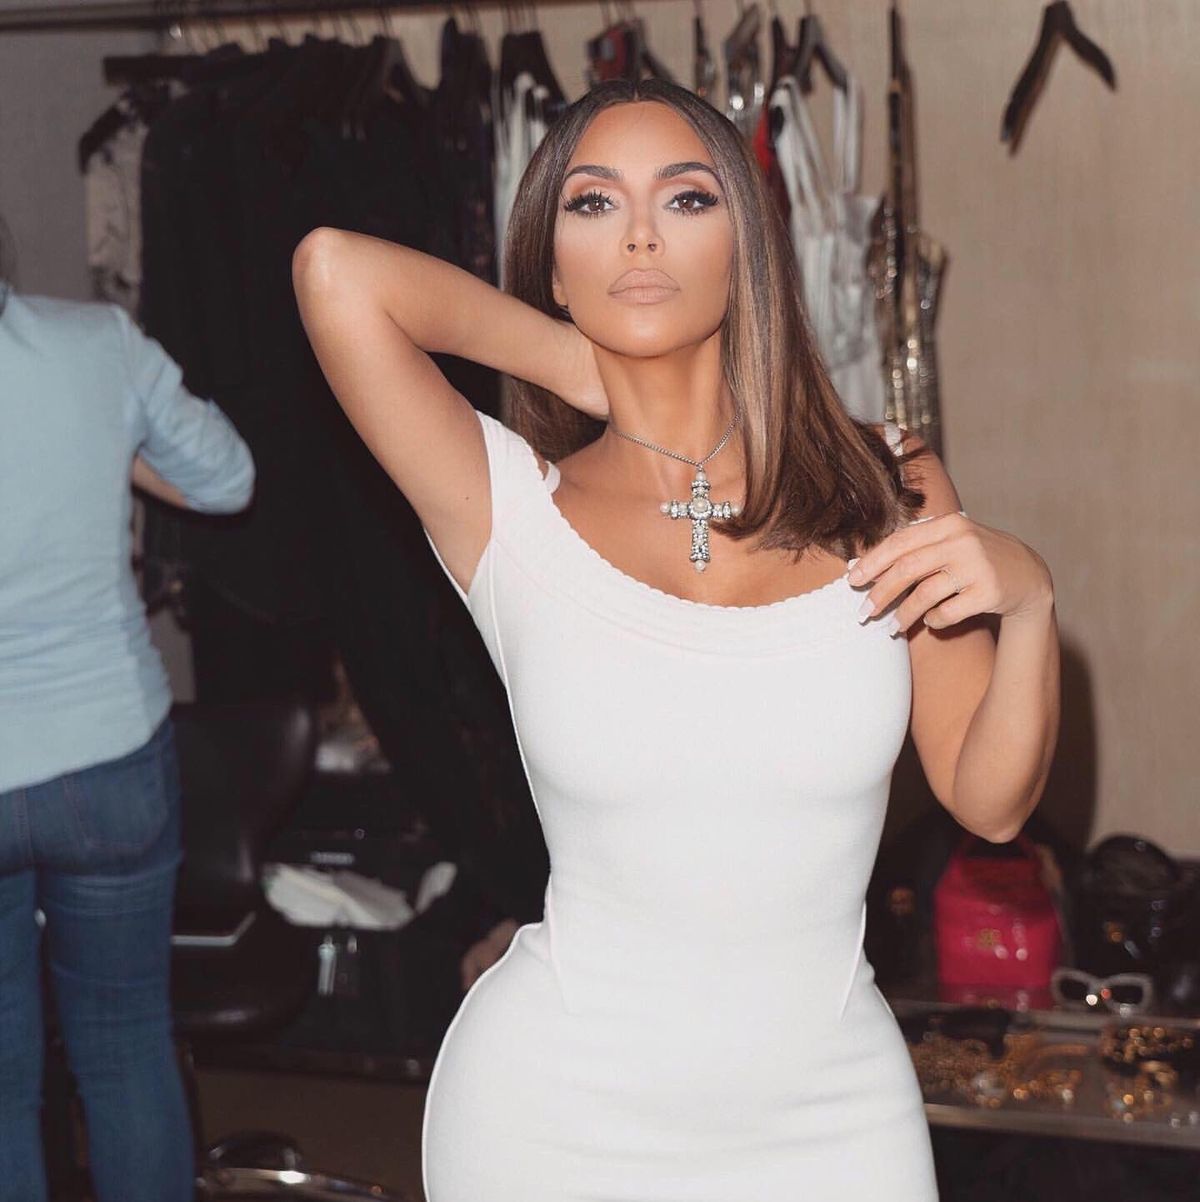 Kim Kardashian reveals the name of her new shapewear brand